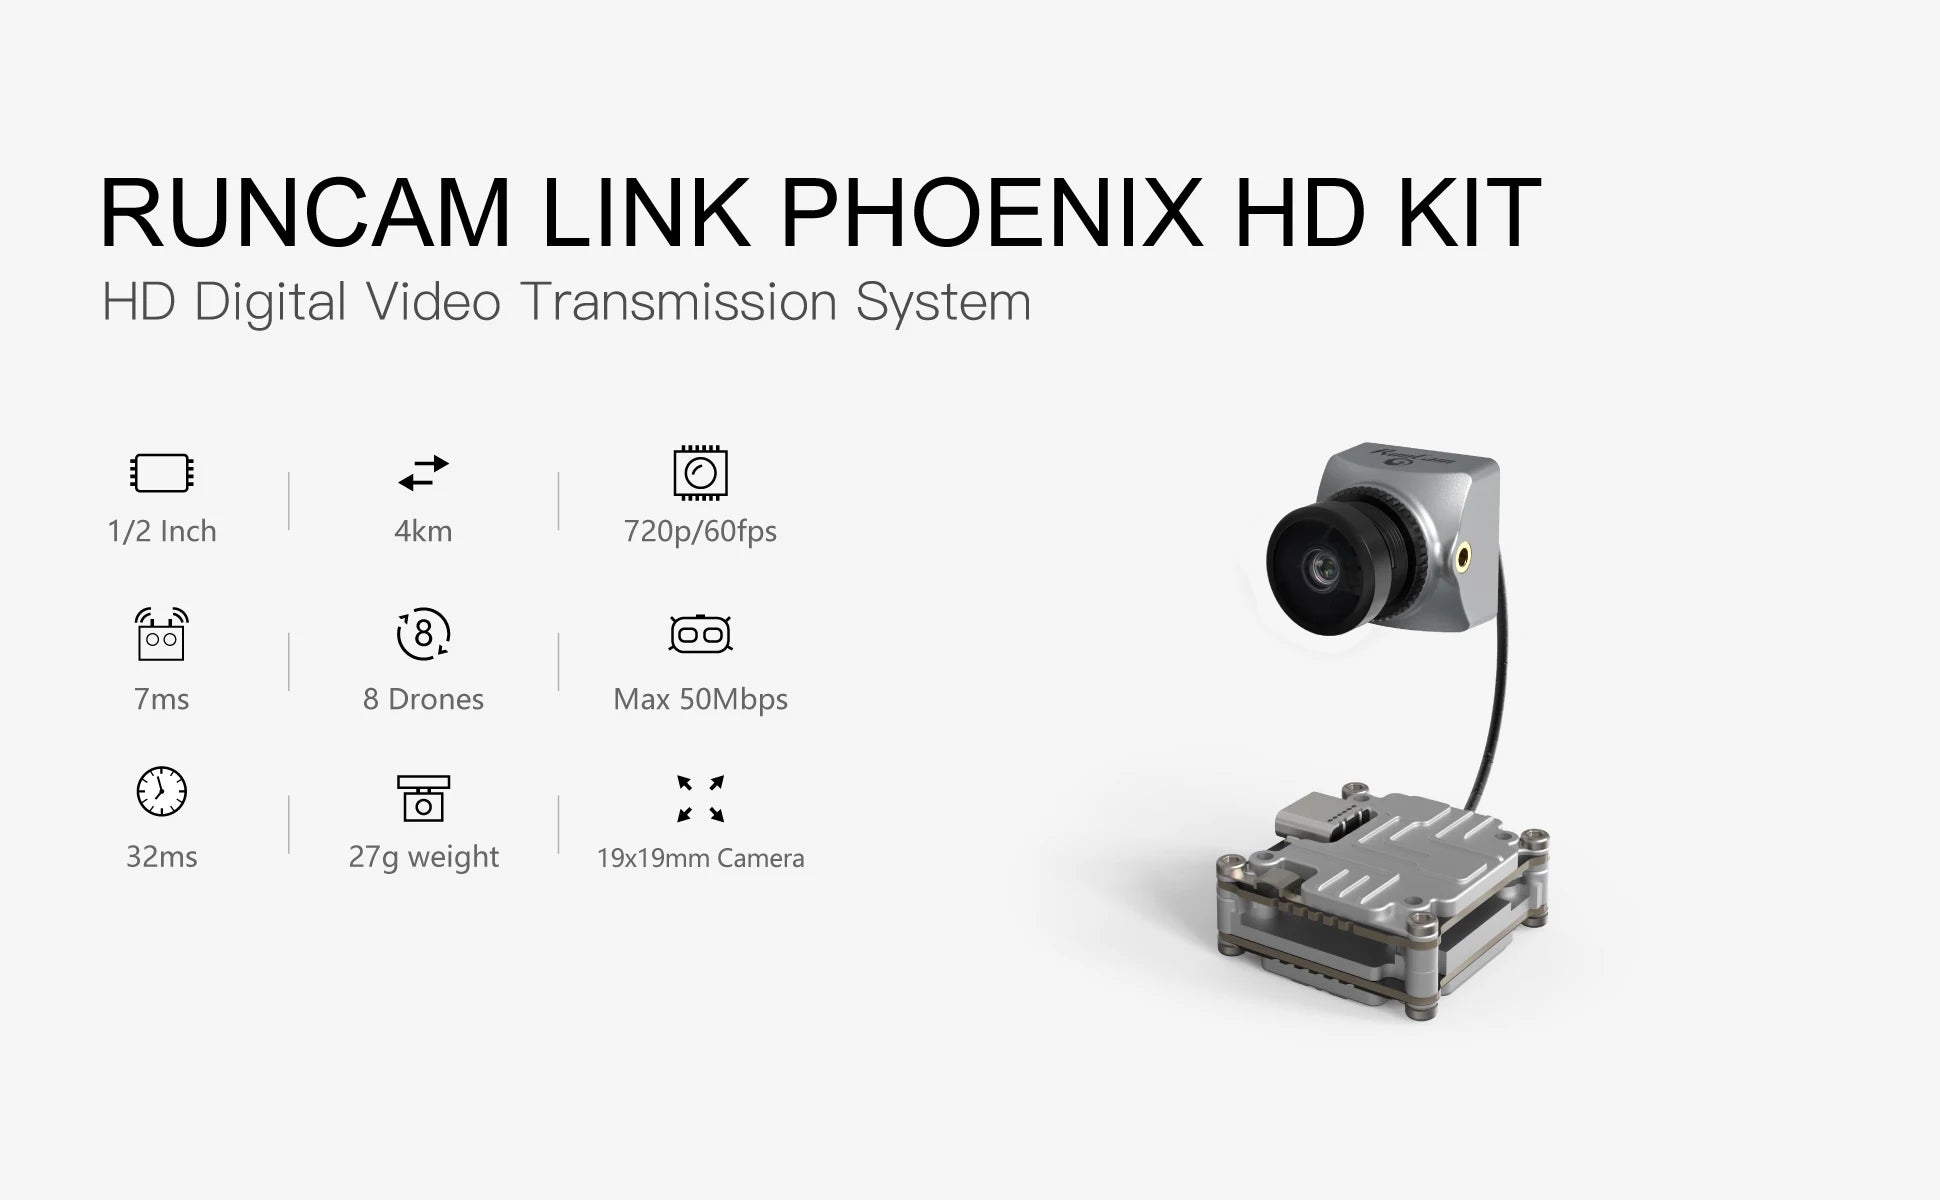 RunCam Link Phoenix HD Kit, RUNCAM LINK PHOENIX HD KIT HD Digital Video Transmission System 1/2